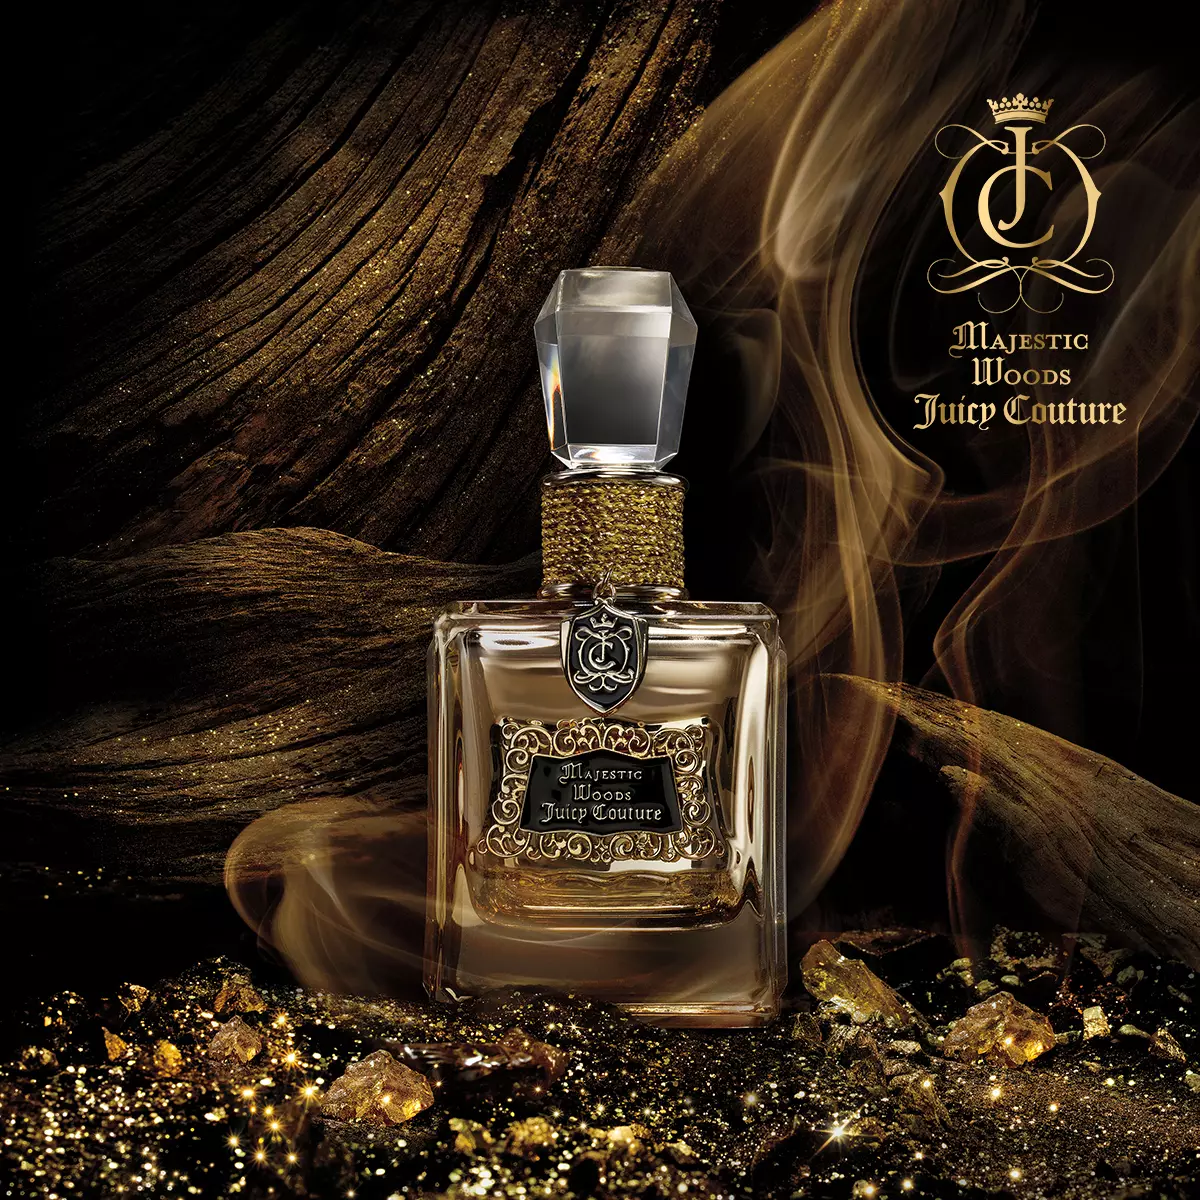 Perfumería Juicy Couture: Perfume, Viva La Juicy Noir Water Auga e outros perfumes, Criterios de selección 25197_18